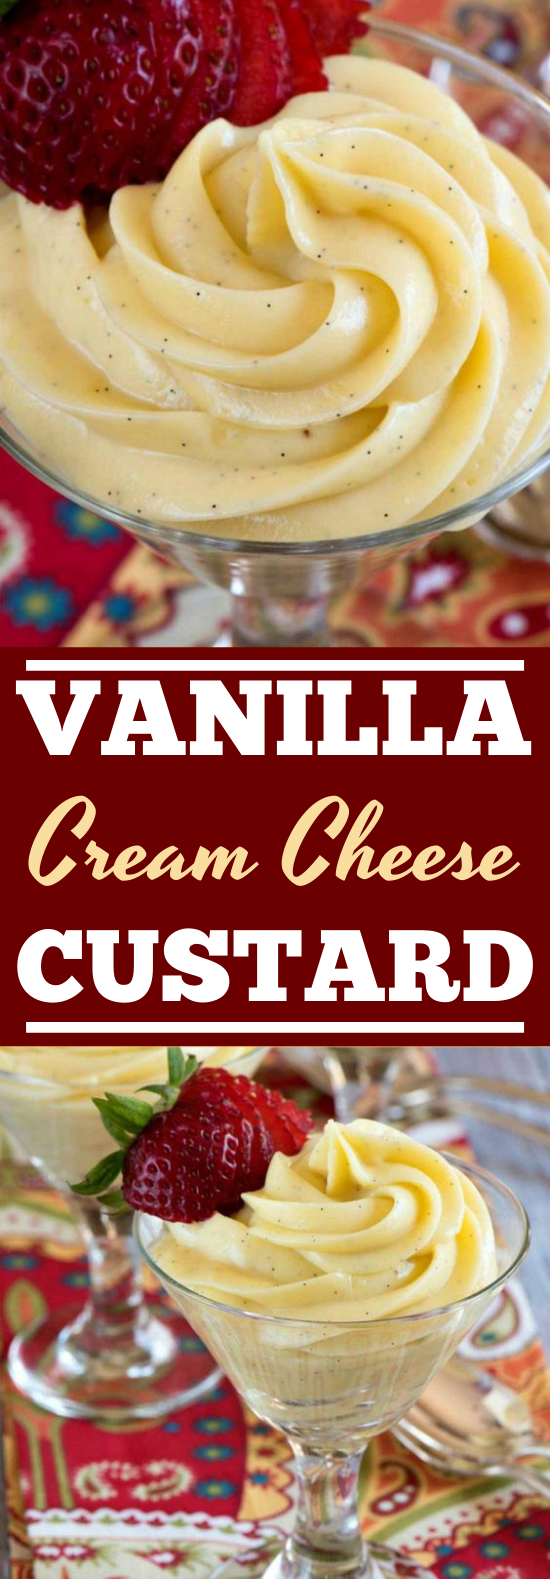 Vanilla Cream Cheese Custard #desserts #easy